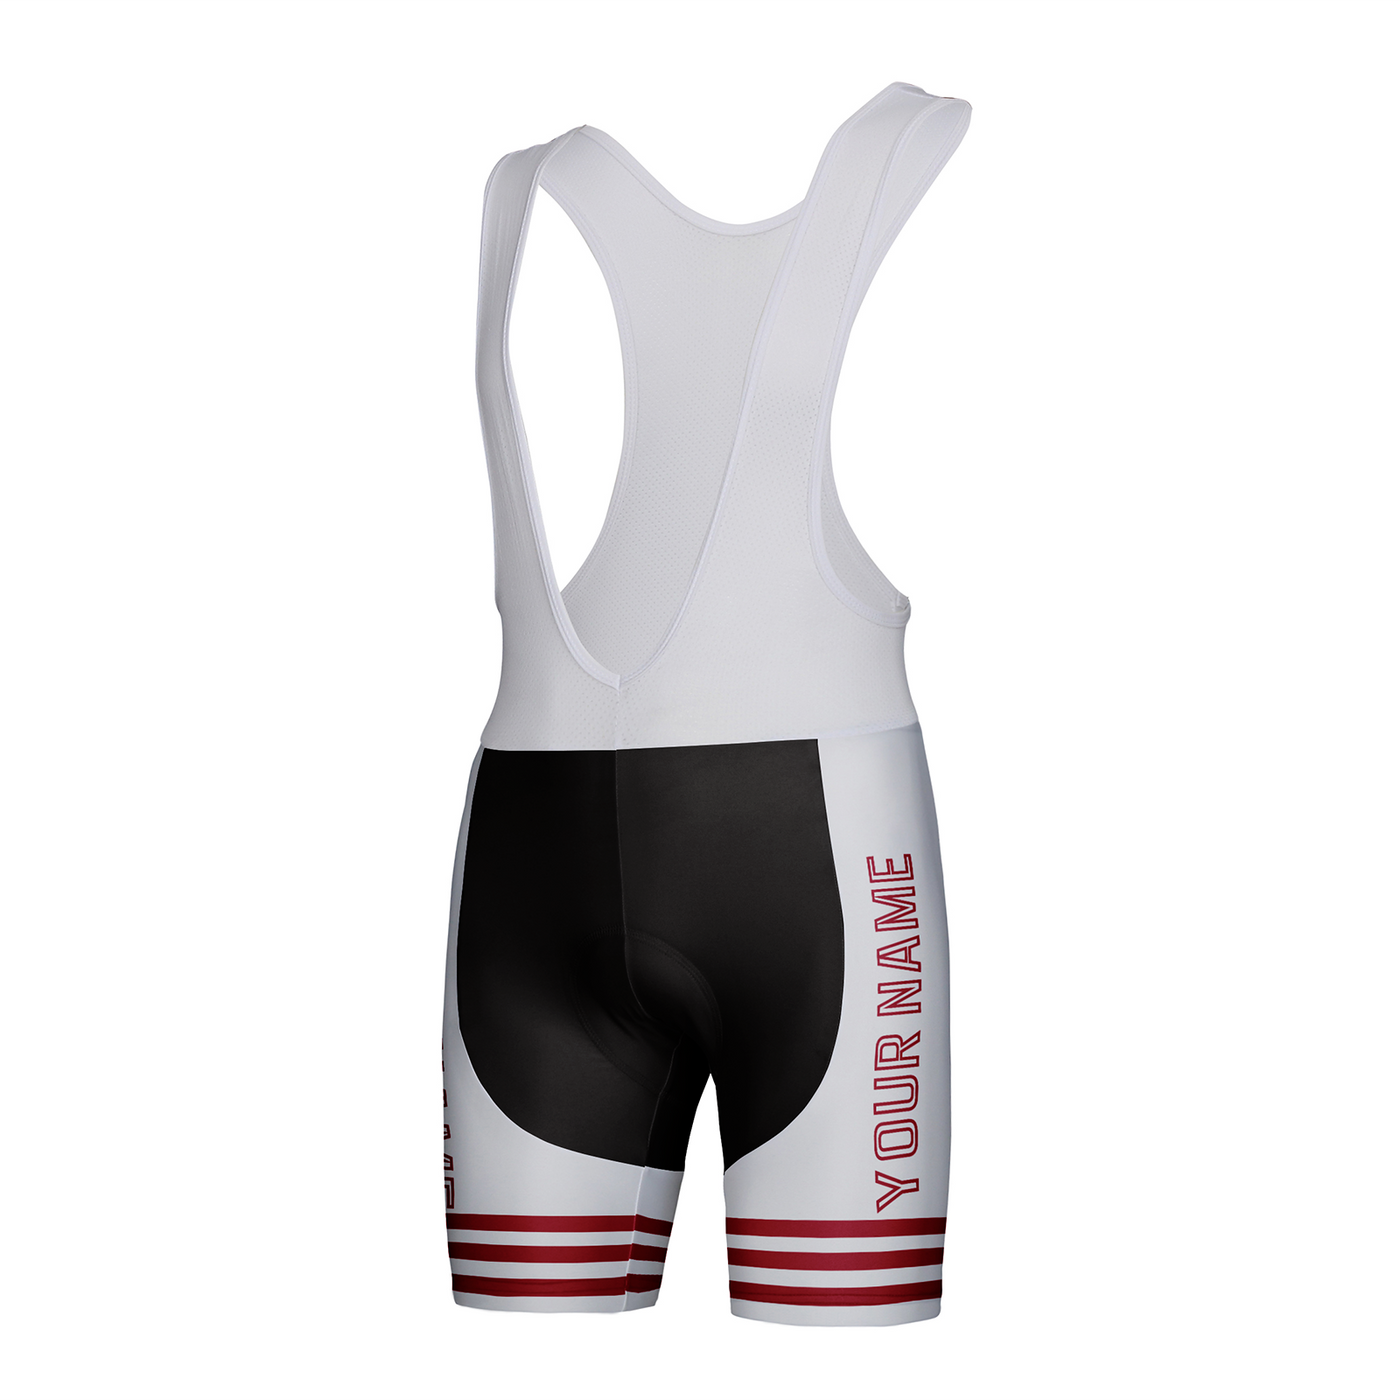 Customized San Francisco Team Unisex Cycling Bib Shorts